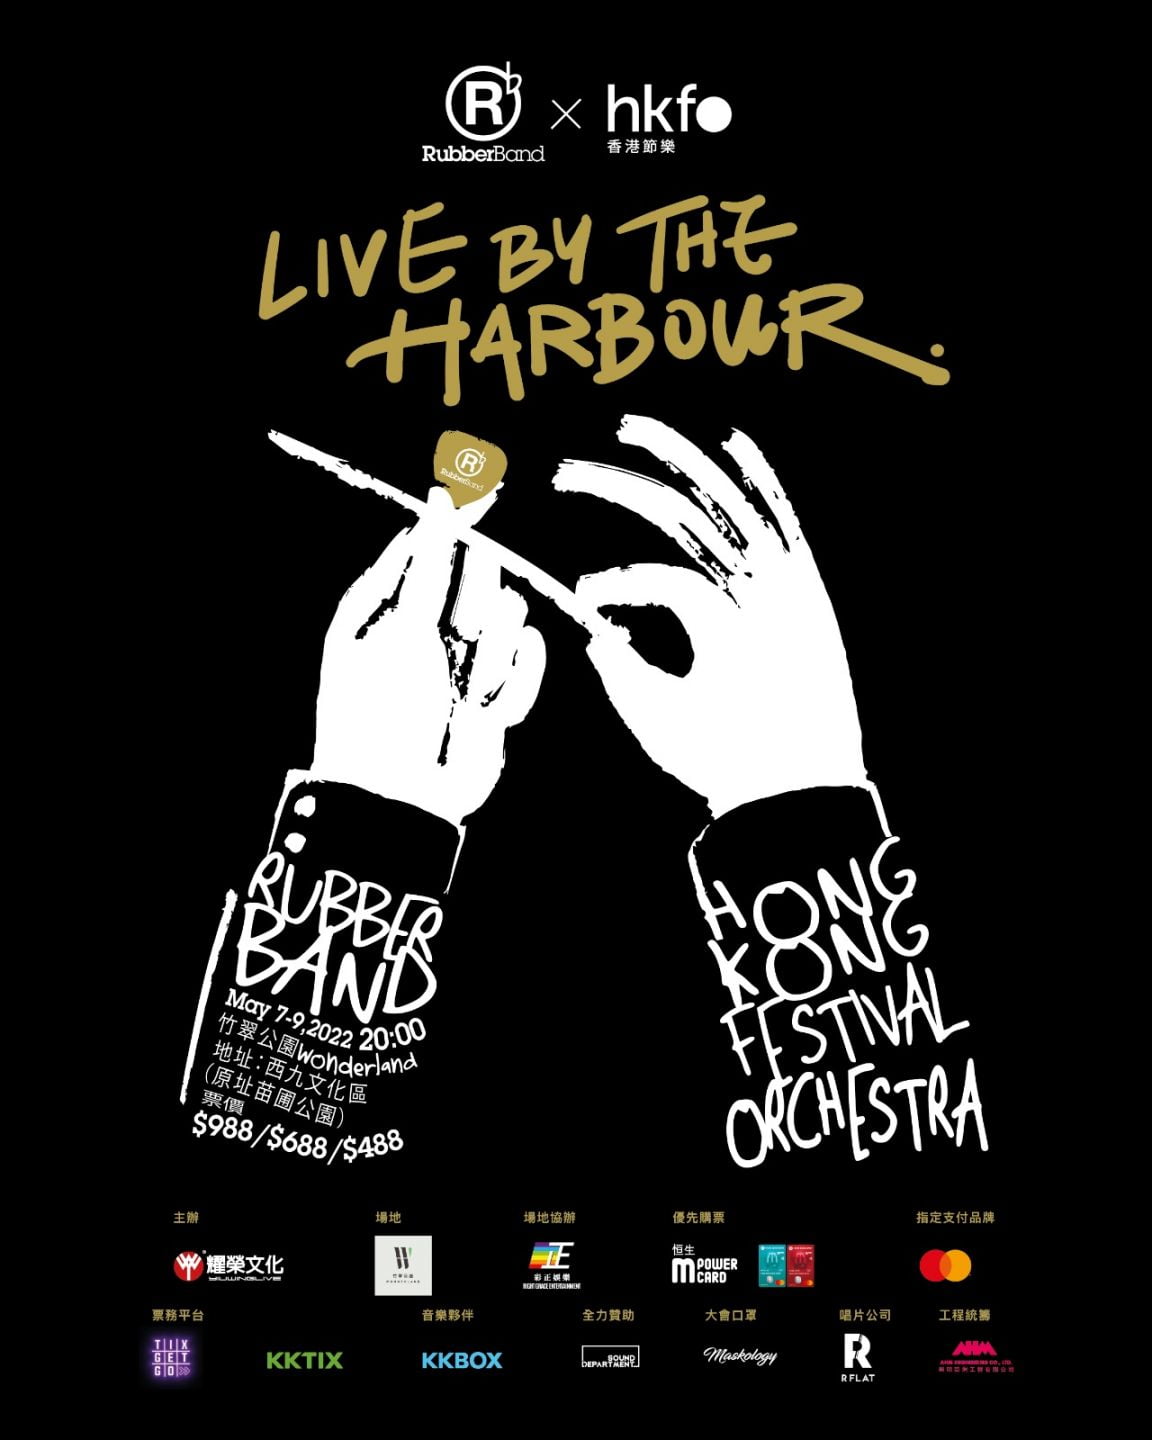 RubberBand x Hong Kong Festival Orchestra